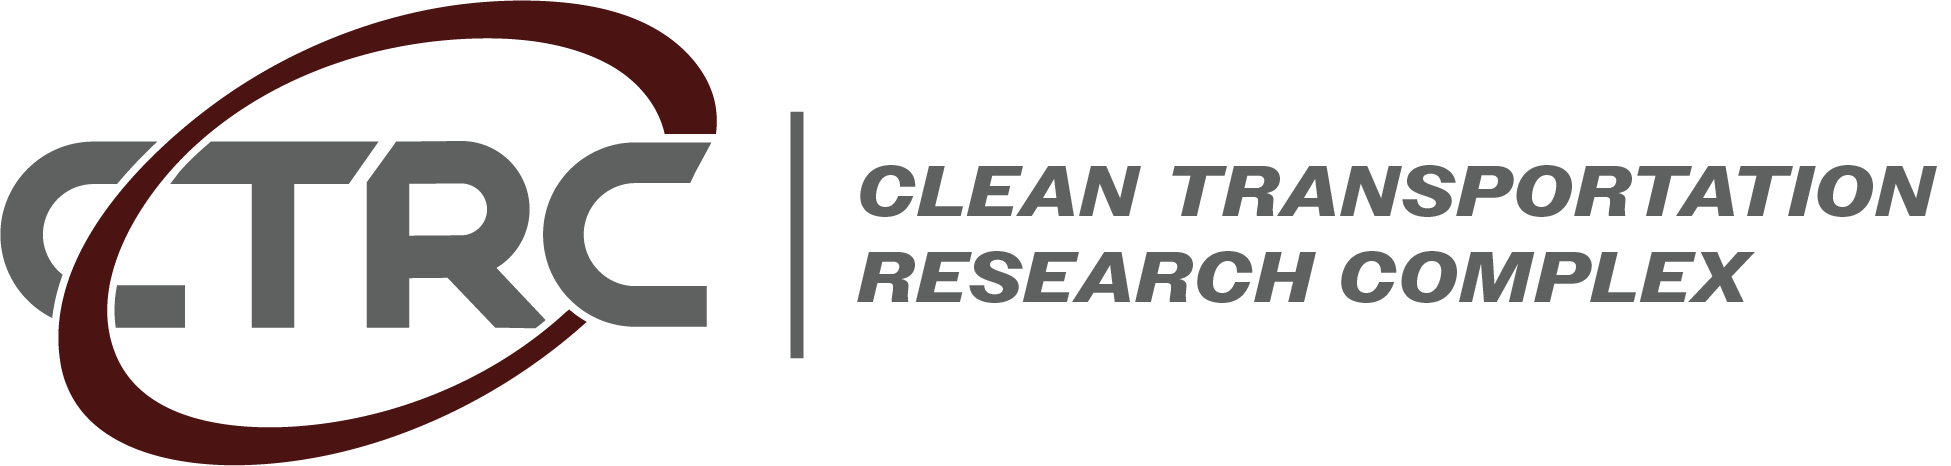 Clean Transportation Research Complex (CTRC)